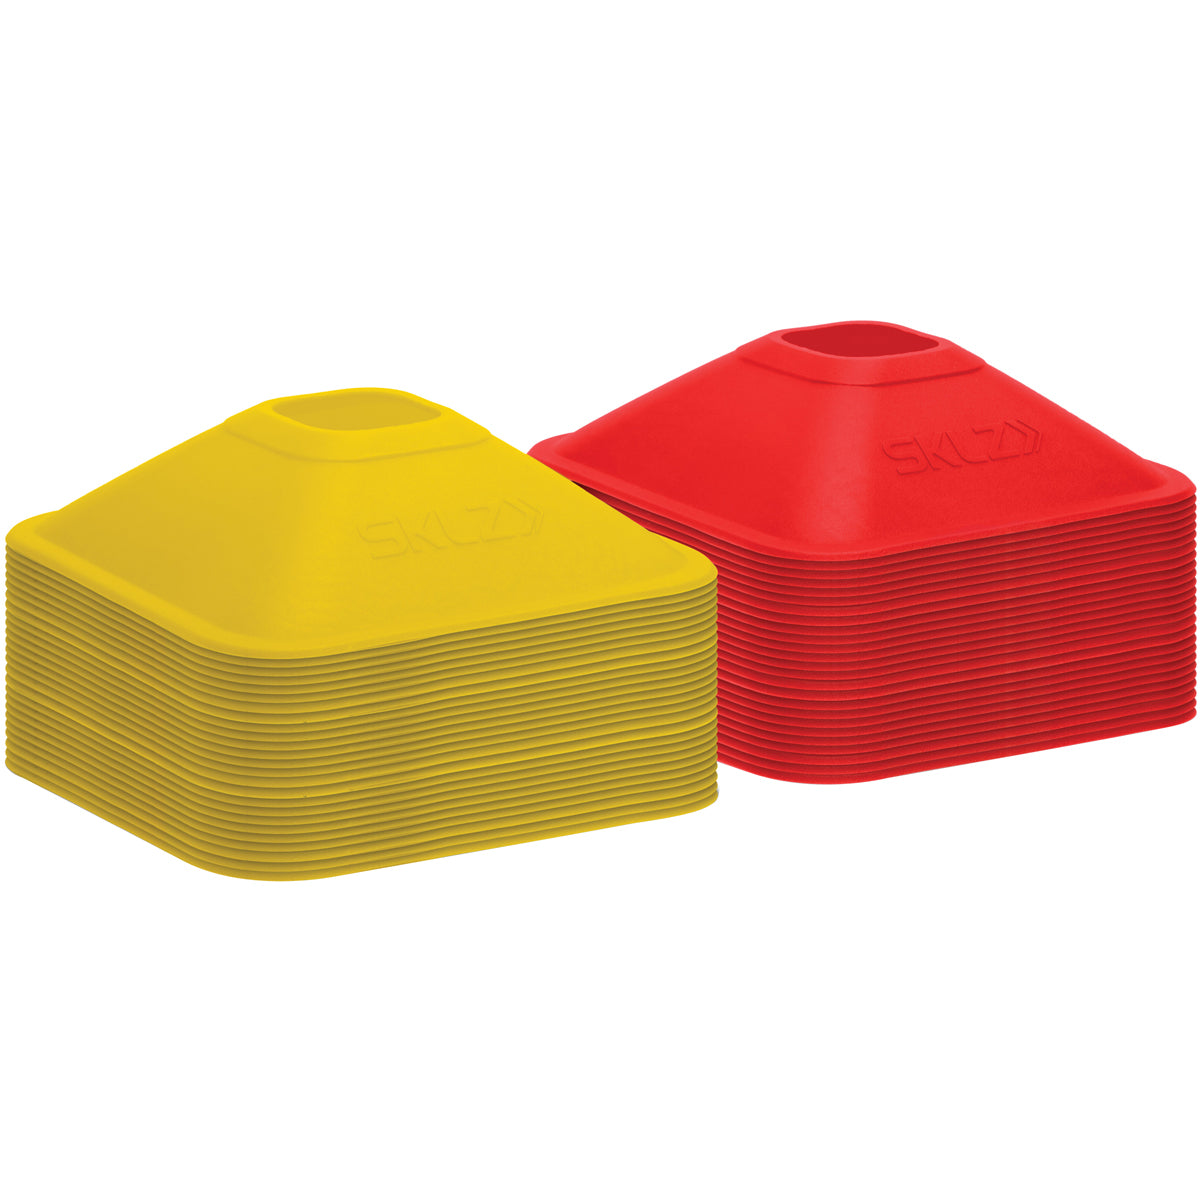 SKLZ Mini Training Cones 50-Pack - Red/Yellow SKLZ